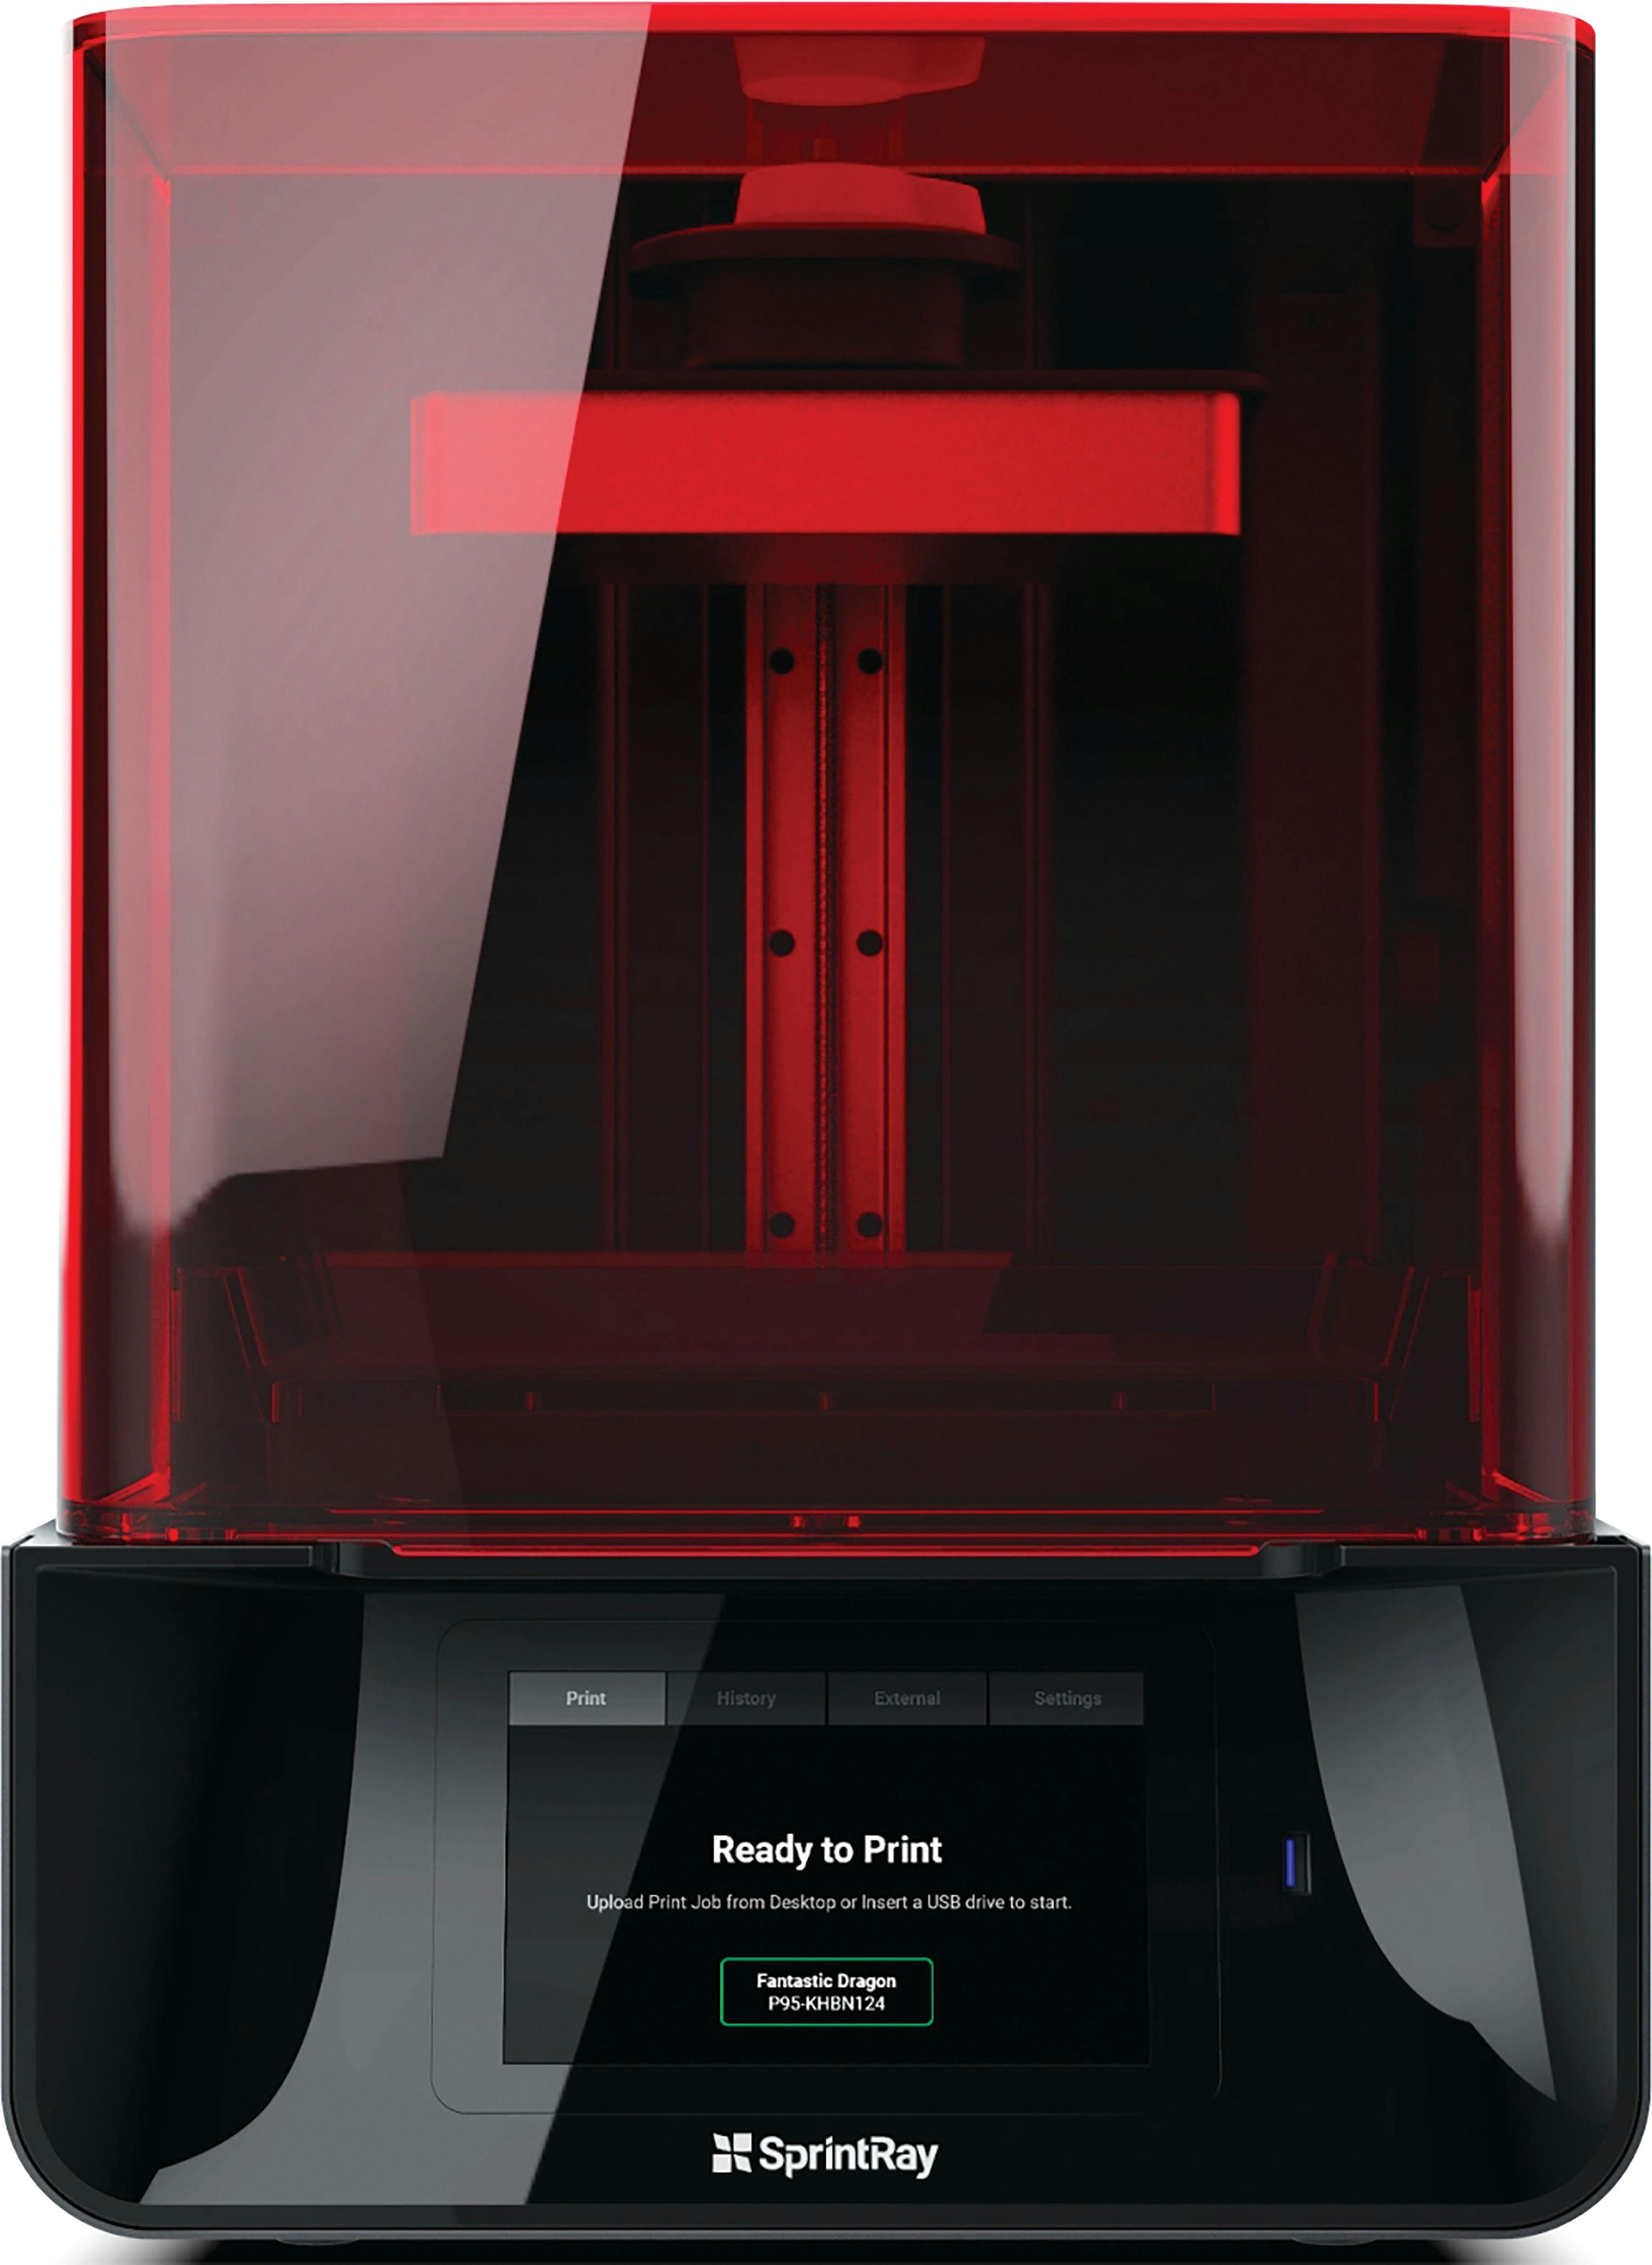 SprintRay Pro 95 3D Printer